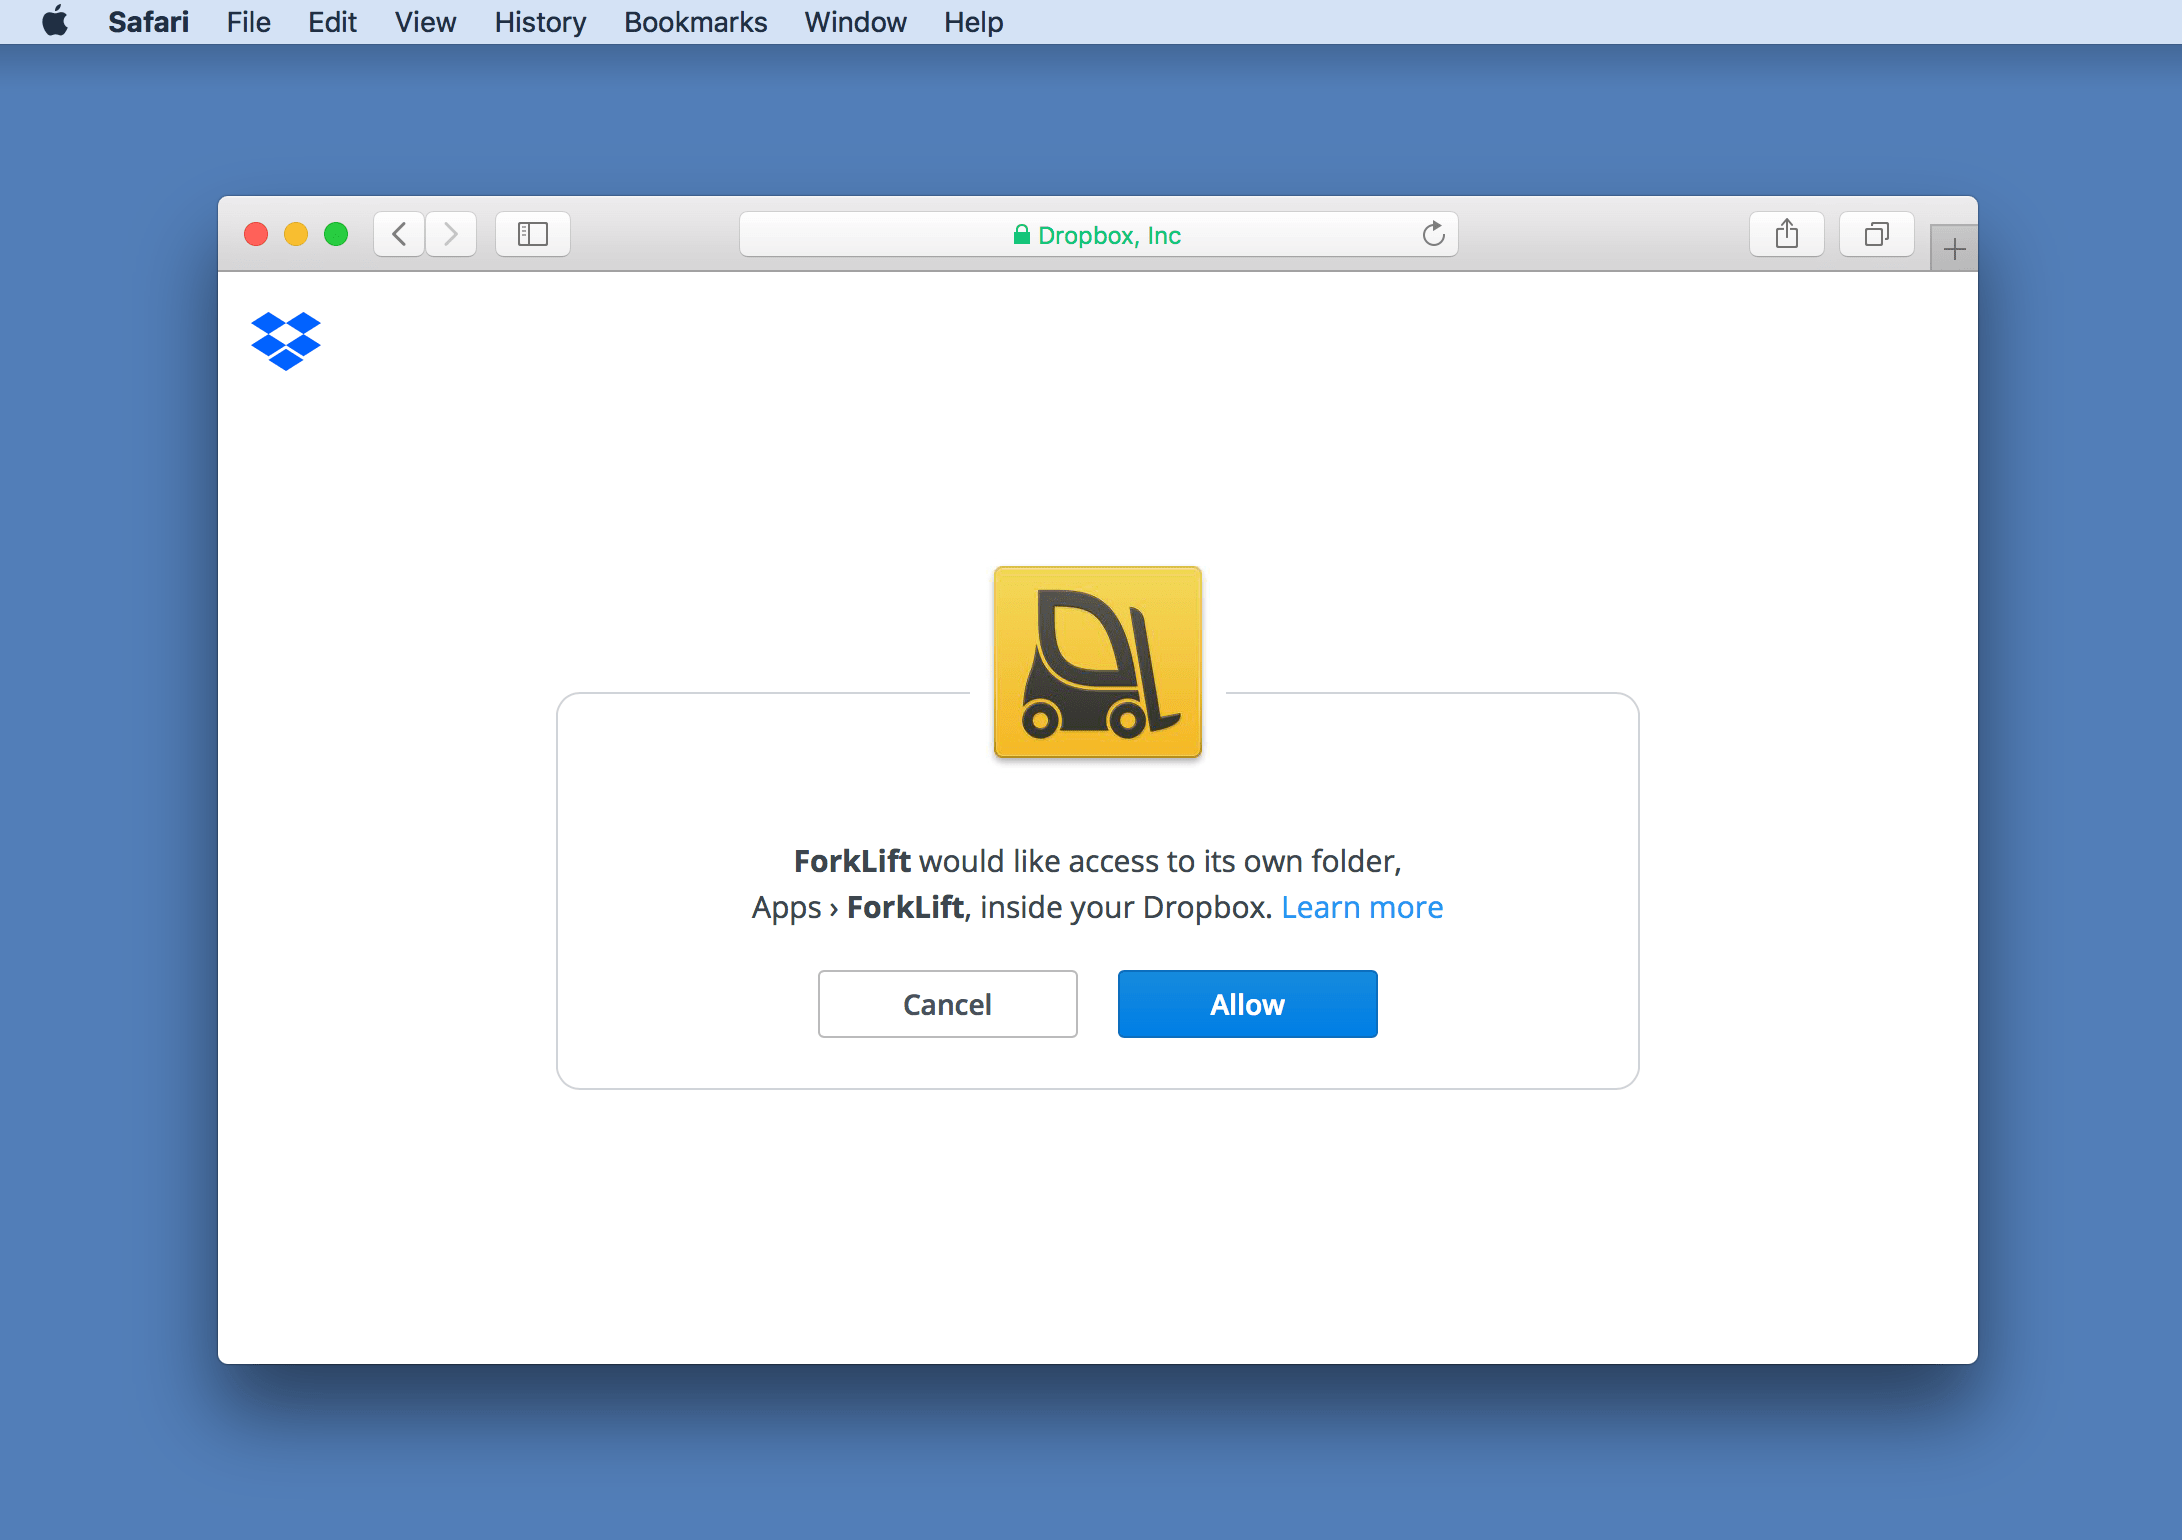 mac s3 client free